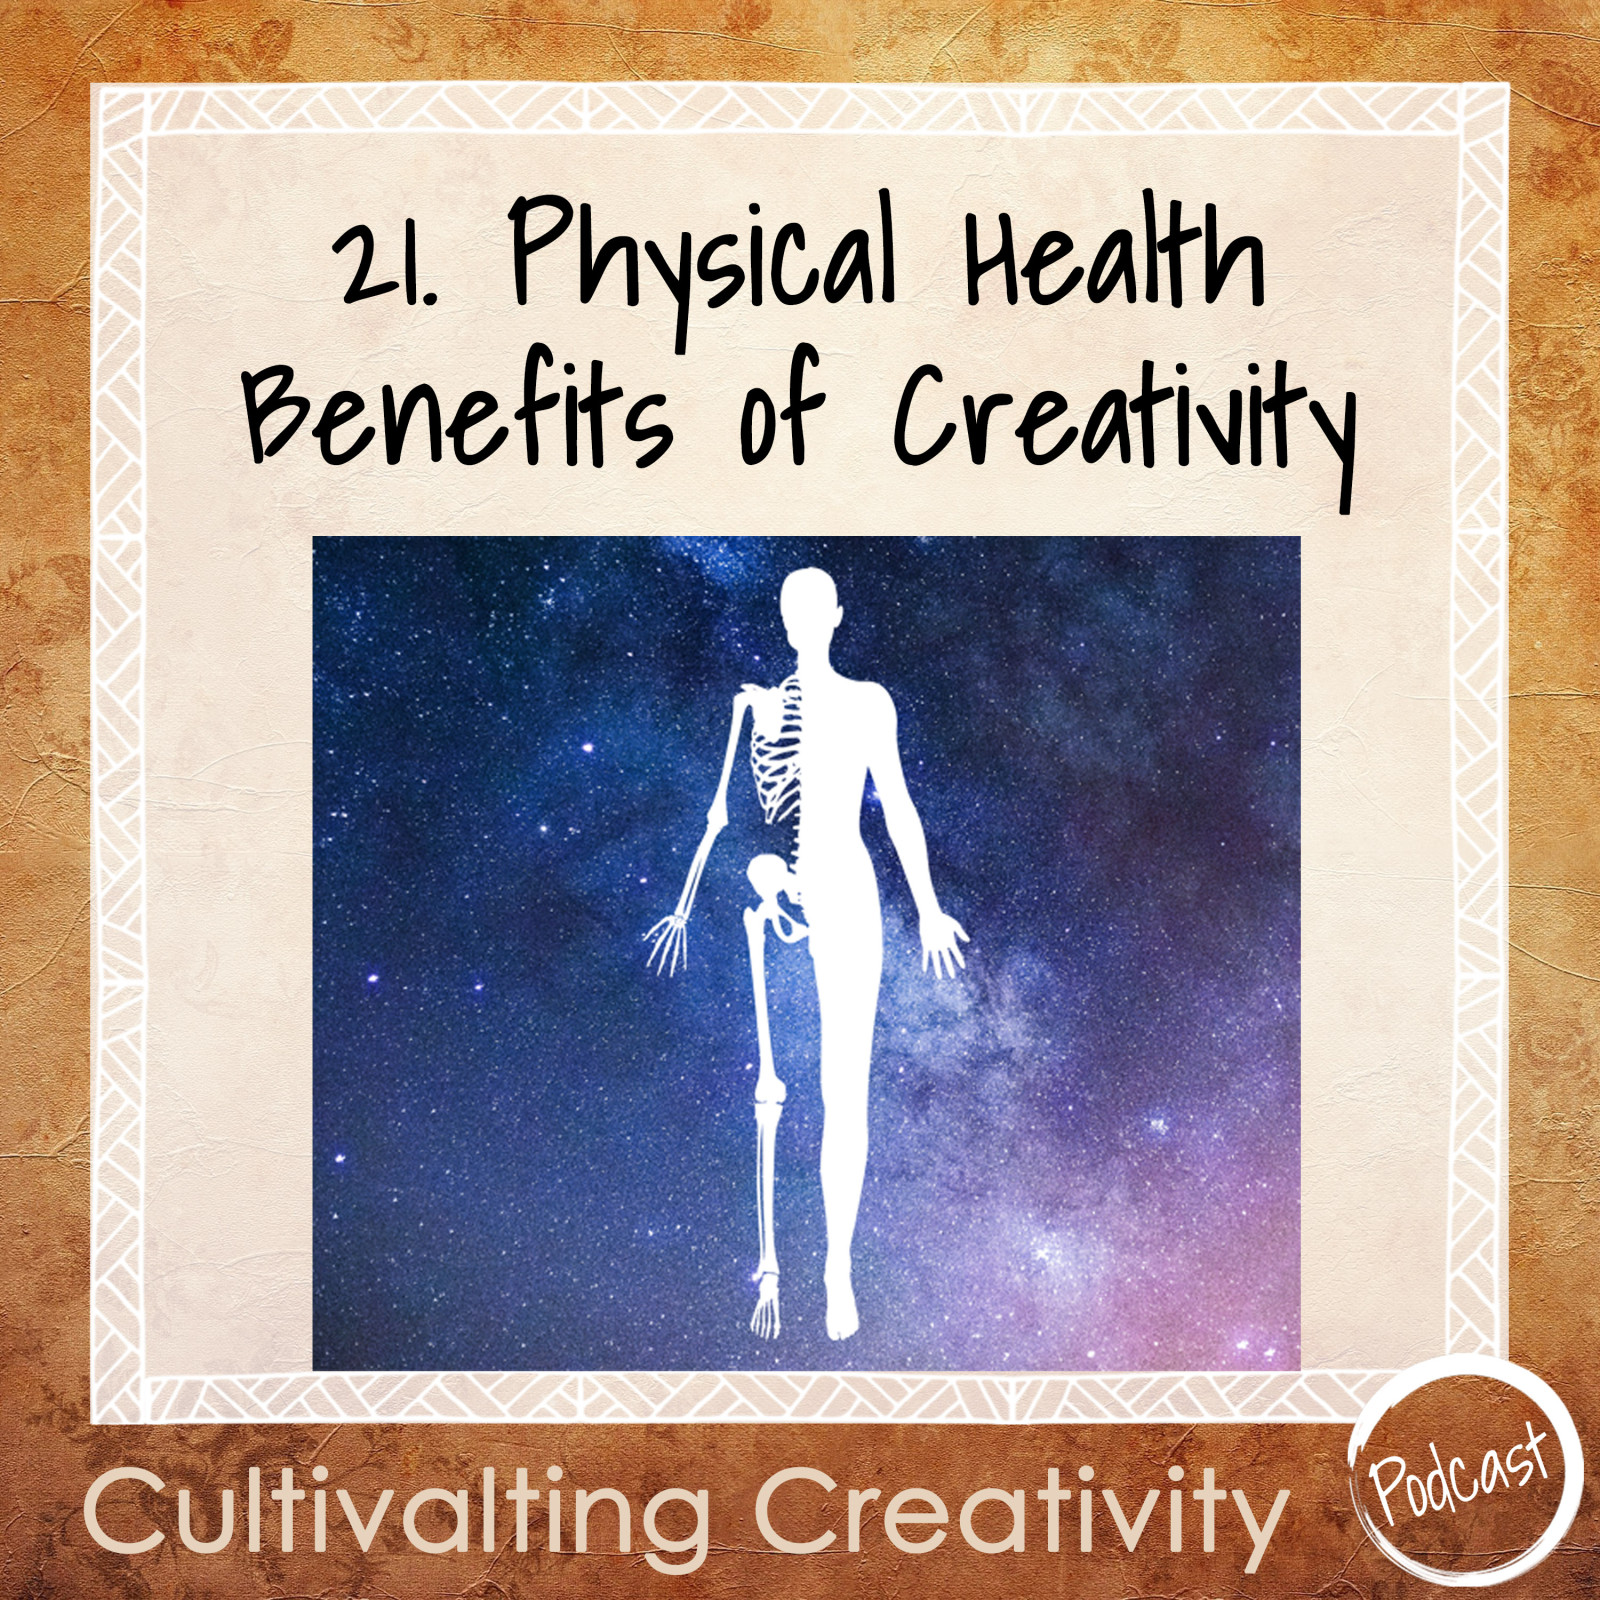 21. Physical Health Benefits of Creativity